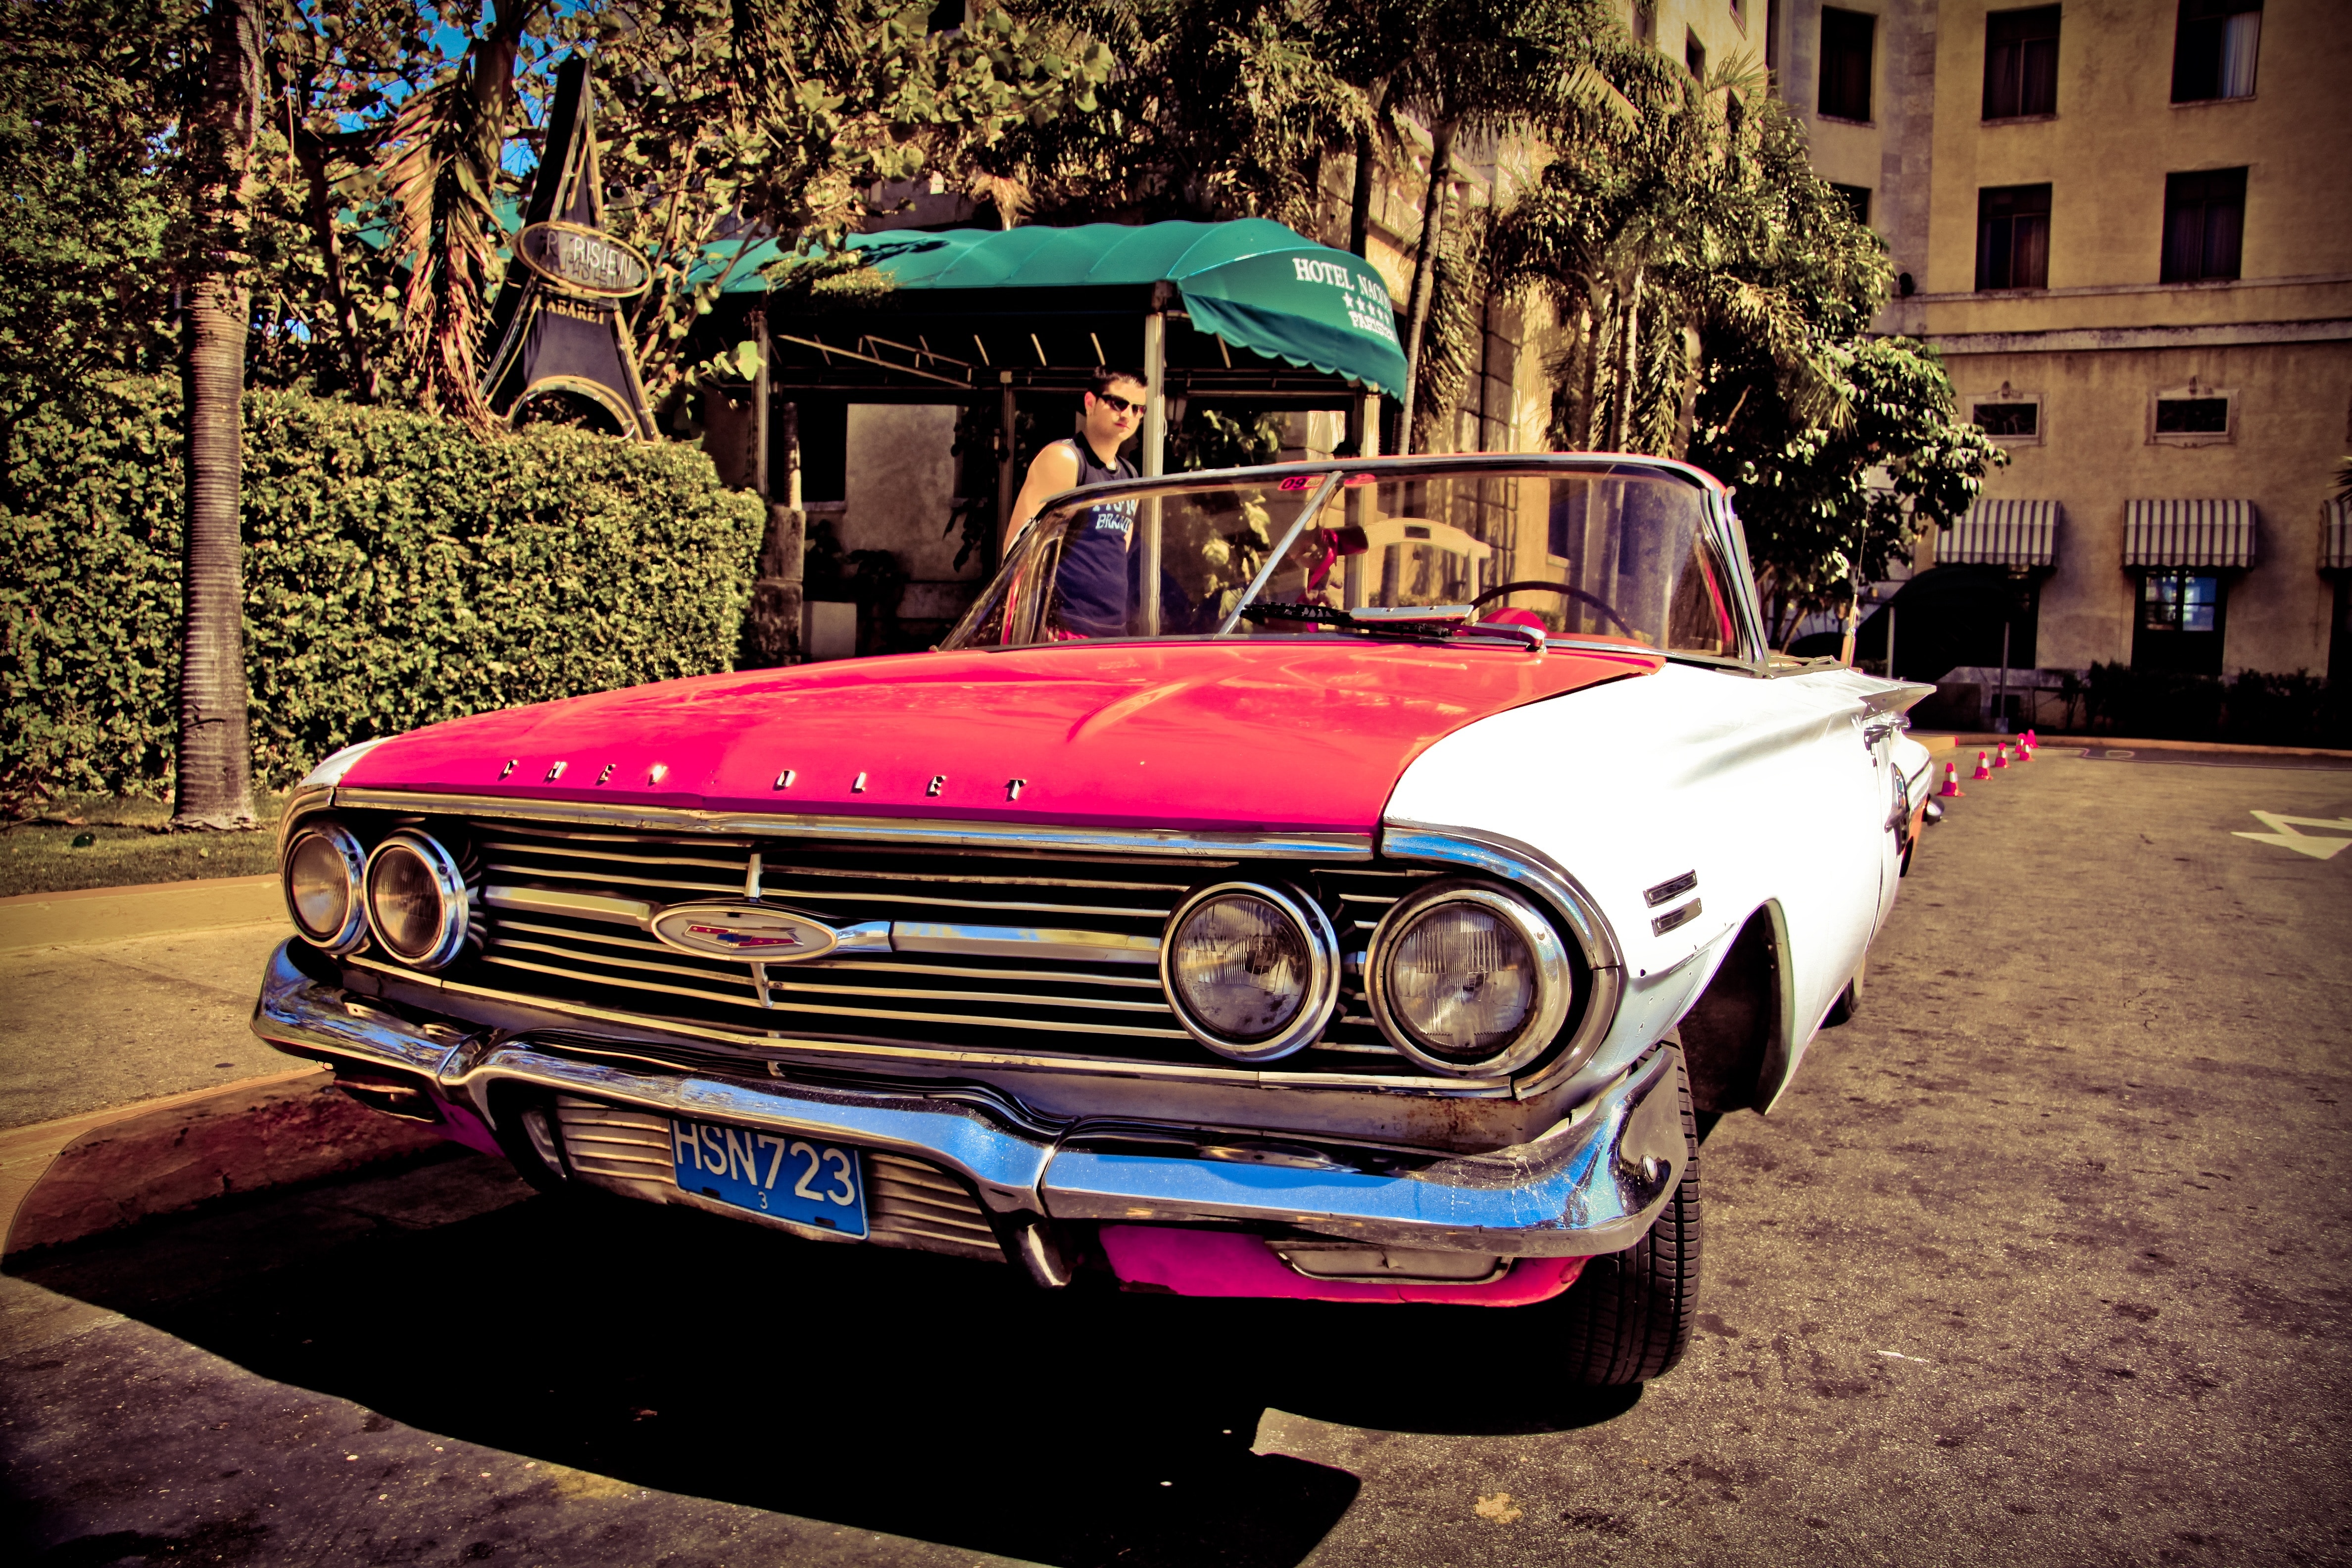 Car, Cars, Truck, Antique Car, Cuba, car, old-fashioned